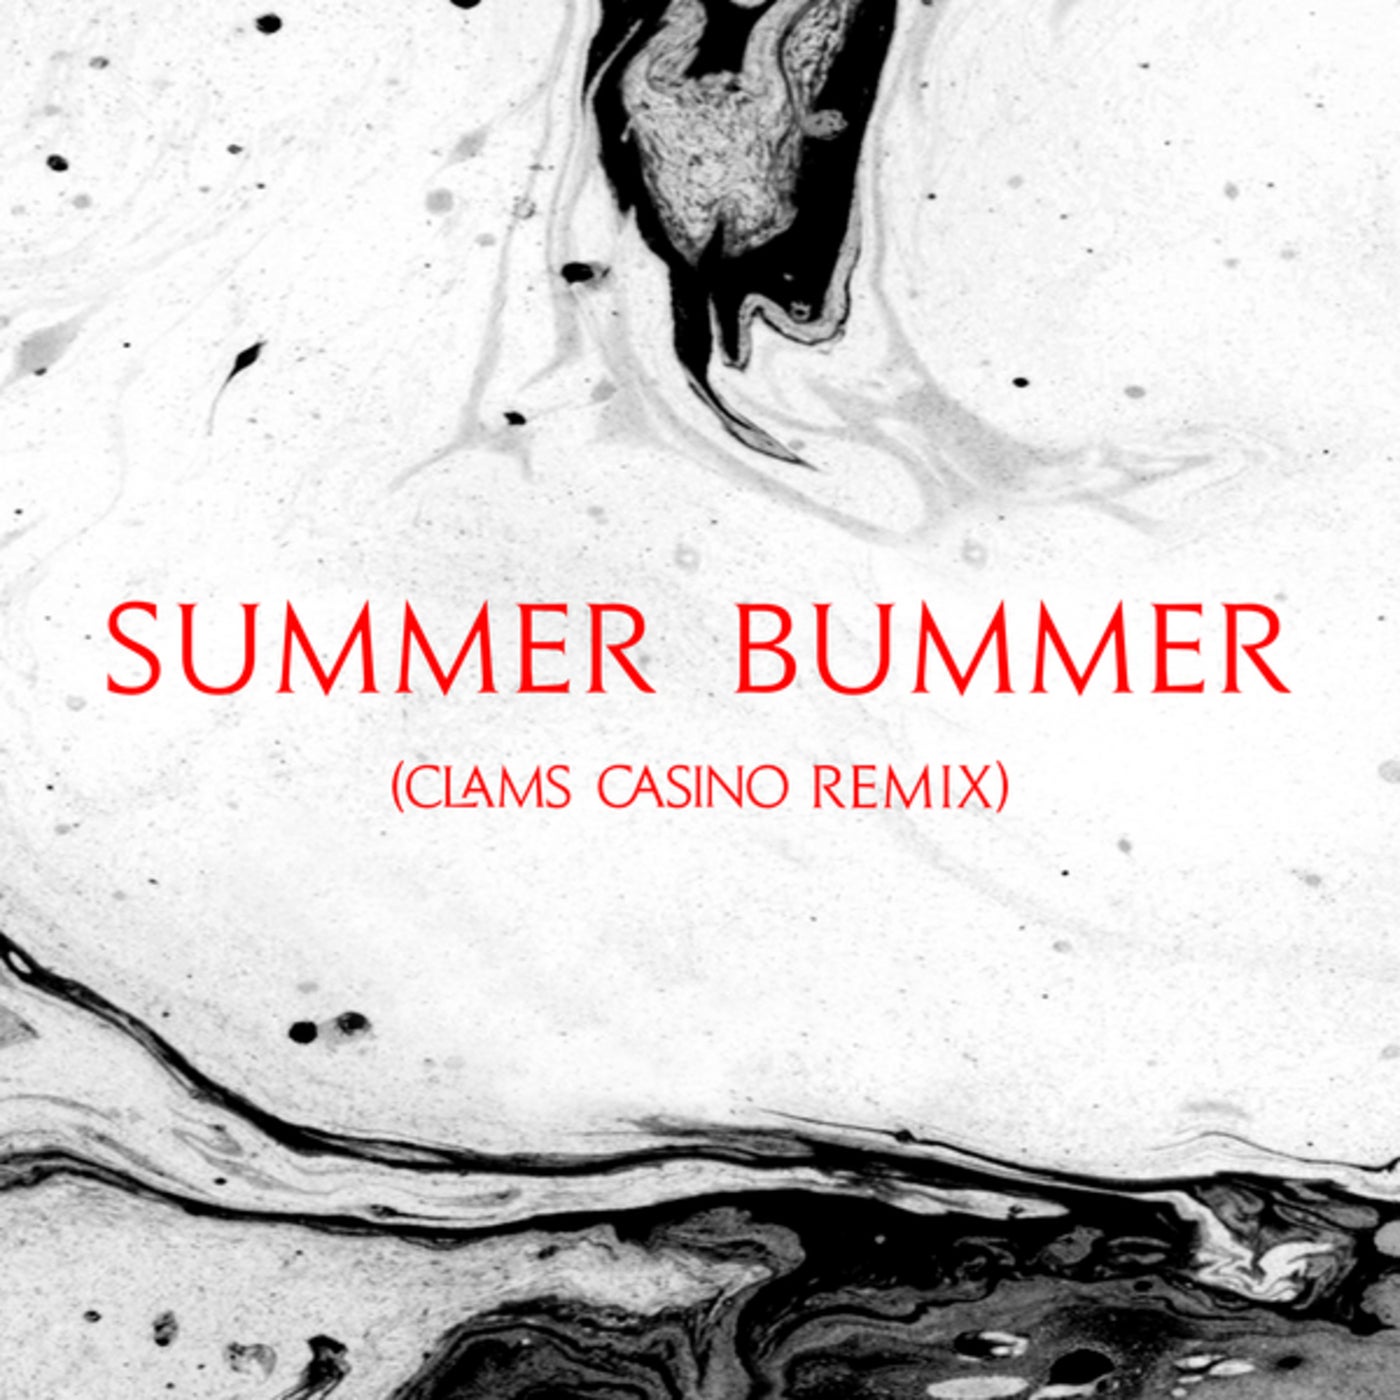 Summer Bummer by Lana Del Rey, A$AP Rocky, Playboi Carti and Clams